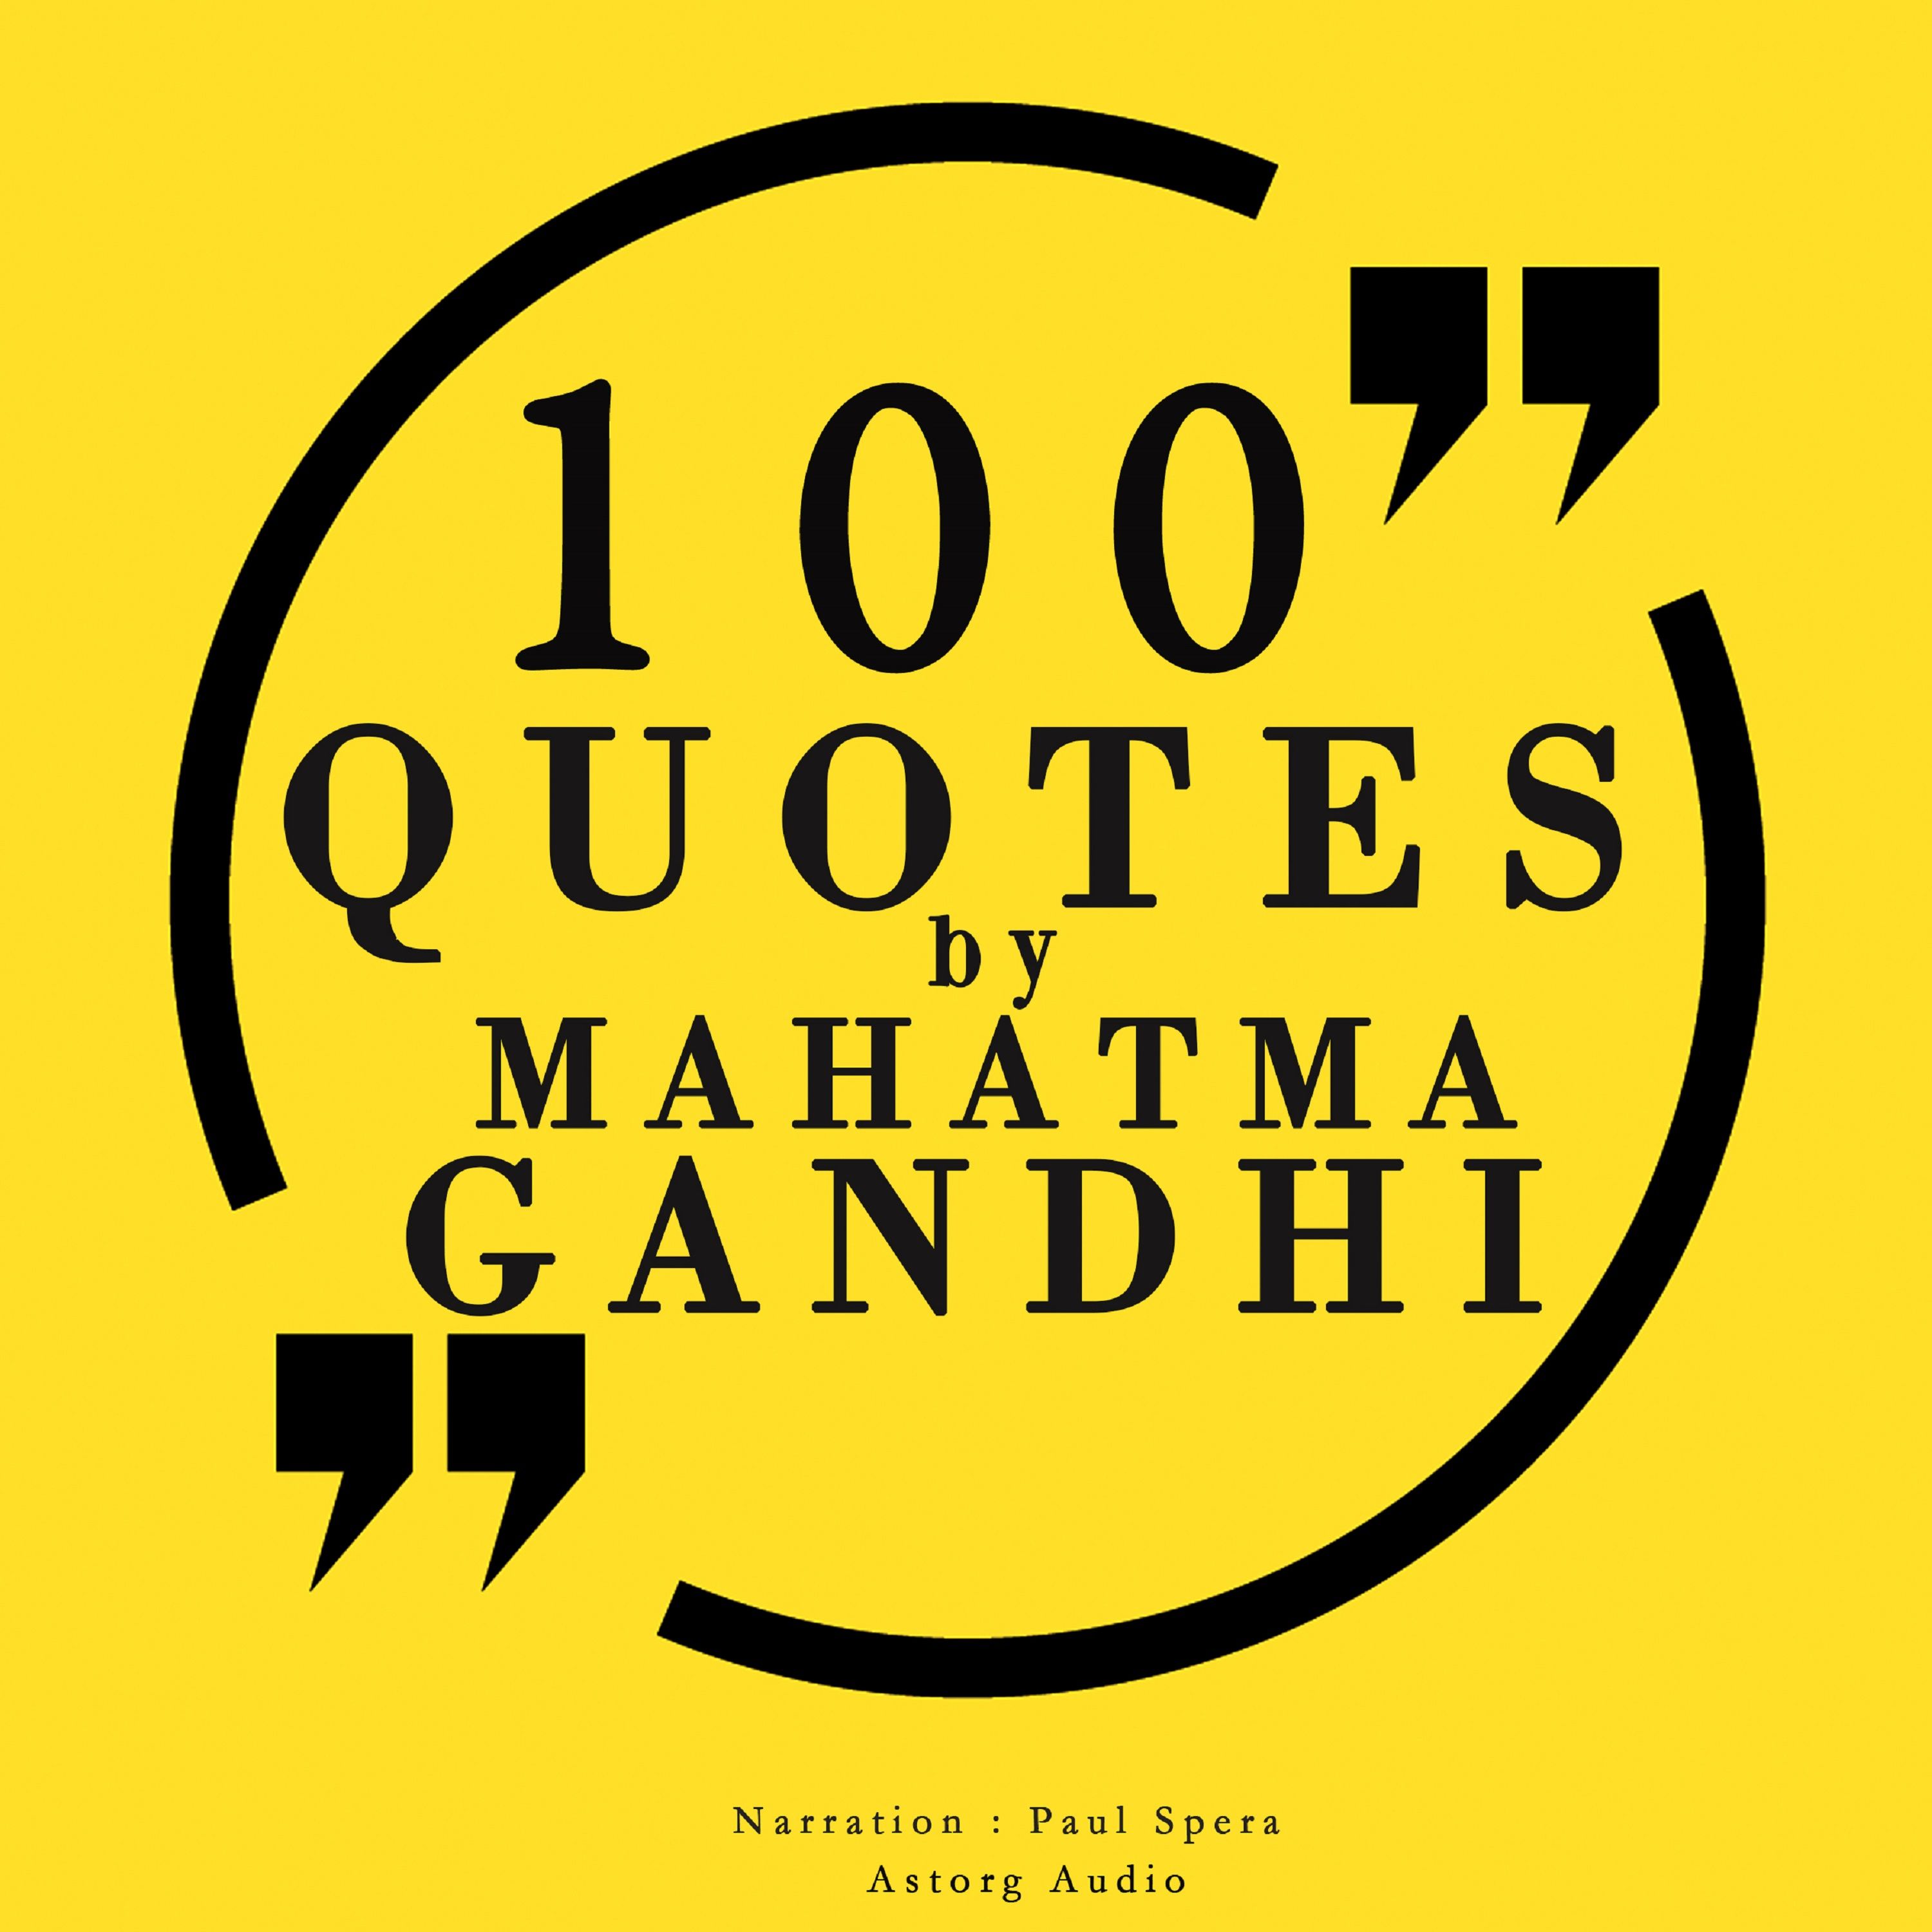 100 Quotes by Mahatma Gandhi, audiobook by Mahatma Gandhi